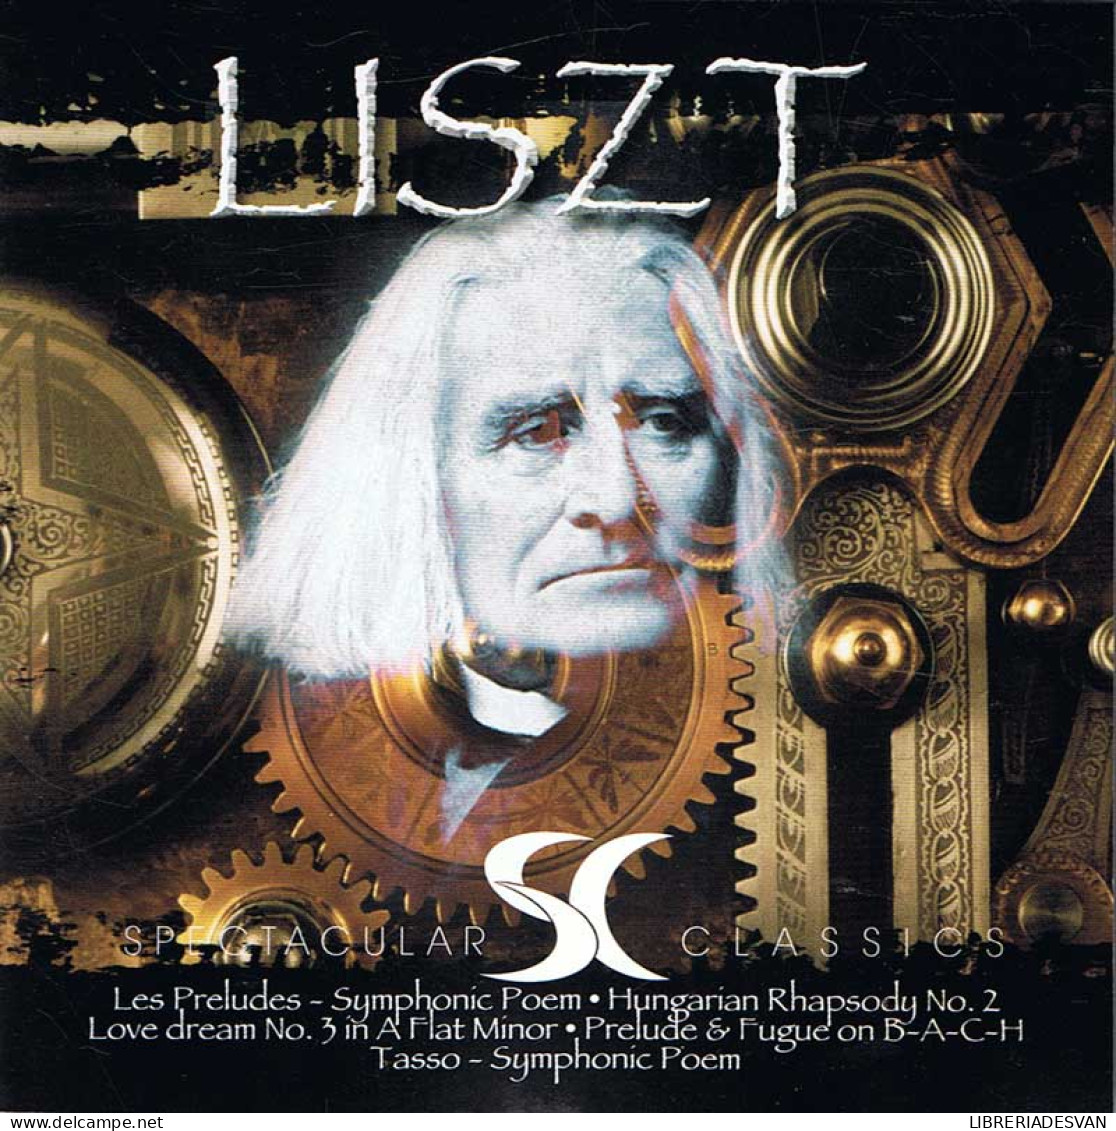 Liszt - Les Preludes. Hungarian Rhapsody No. 2. Love Dream No. 3. Tasso. CD - Classica